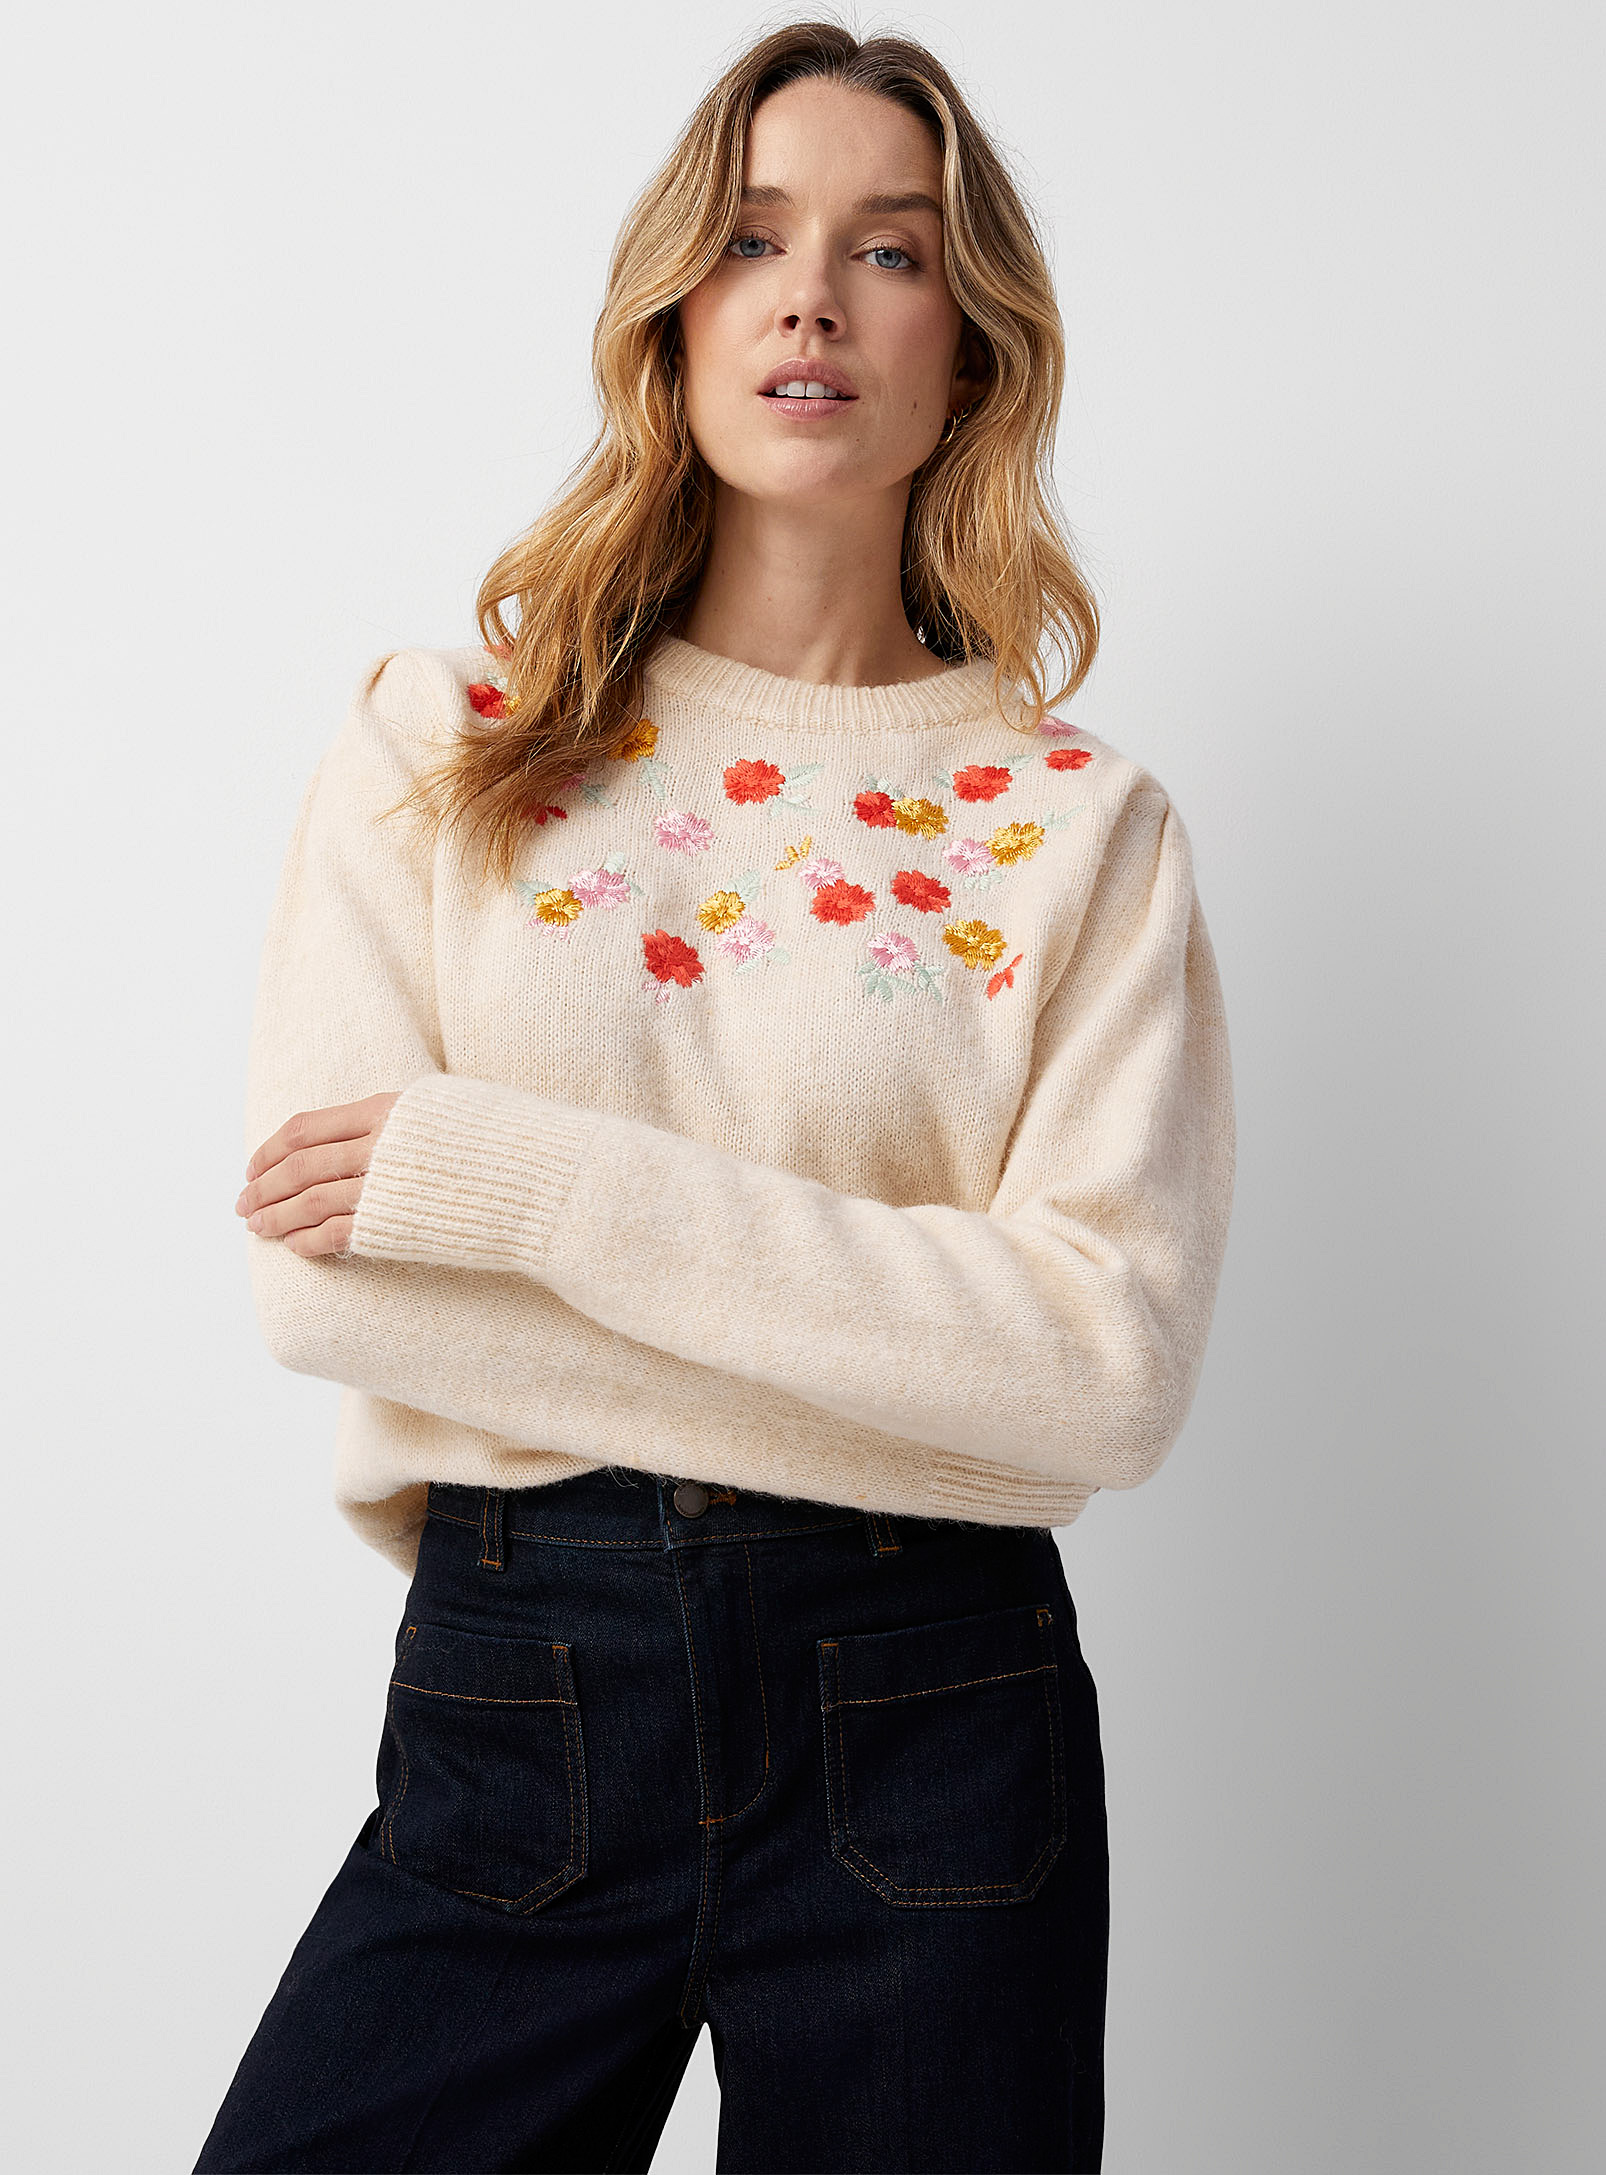 Contemporaine - Women's Embroidery garden sweater